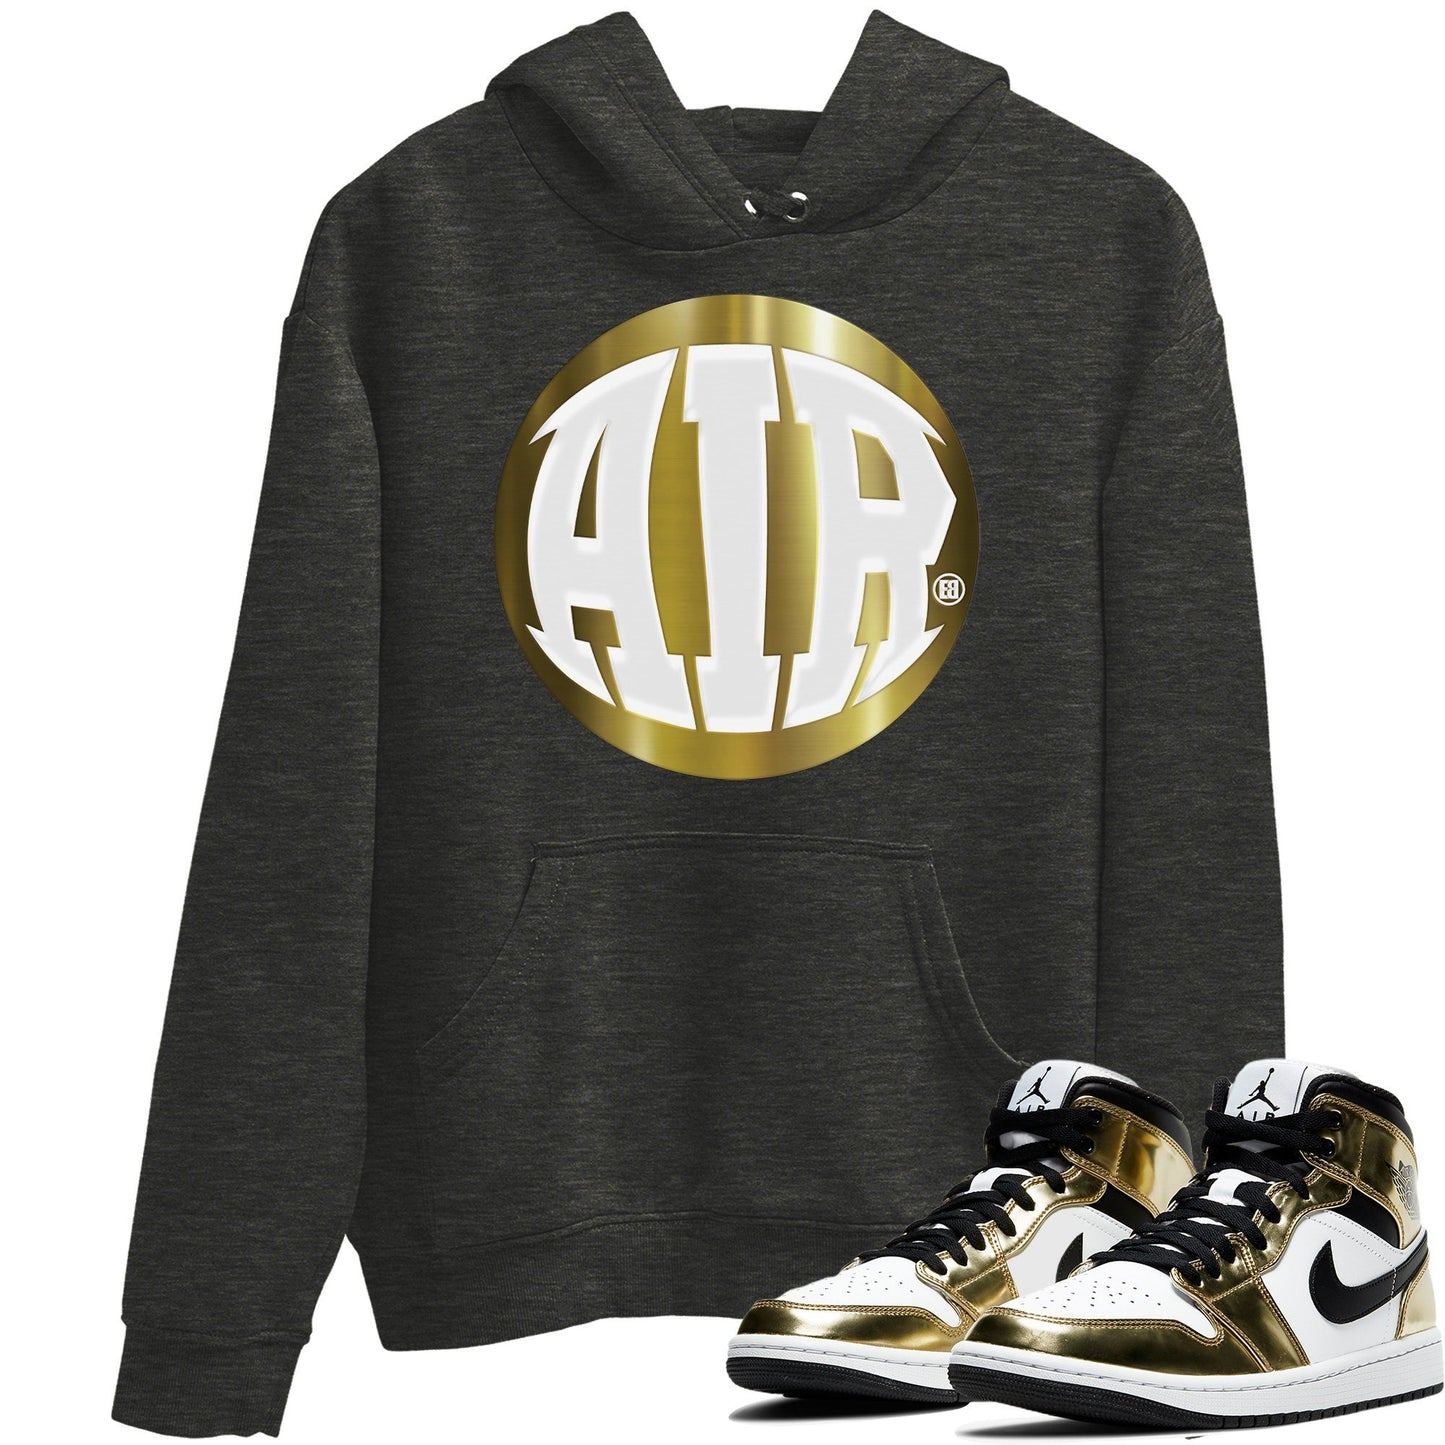 Jordan 1 Metallic Gold Sneaker Tees Drip Gear Zone AIR Sneaker Tees Jordan 1 Metallic Gold Shirt Unisex Shirts